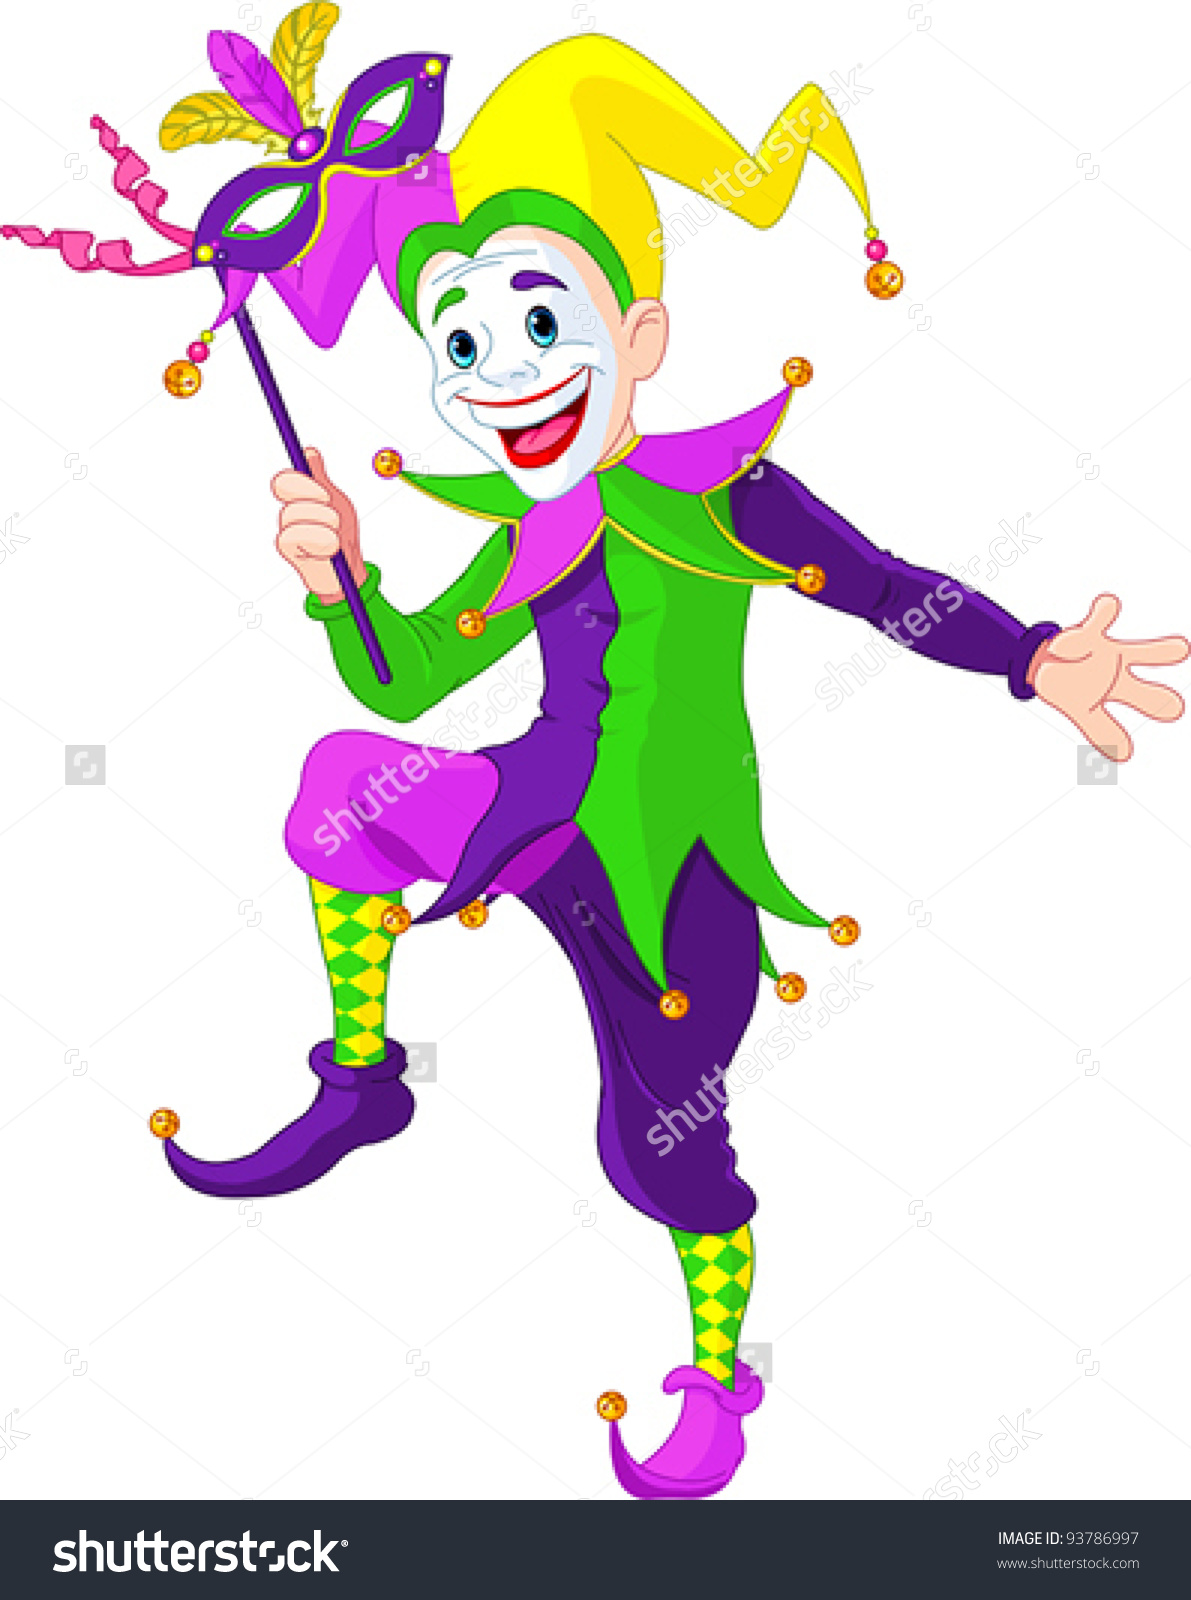 Clip art illustration of a cartoon Mardi Gras jester holding a mask